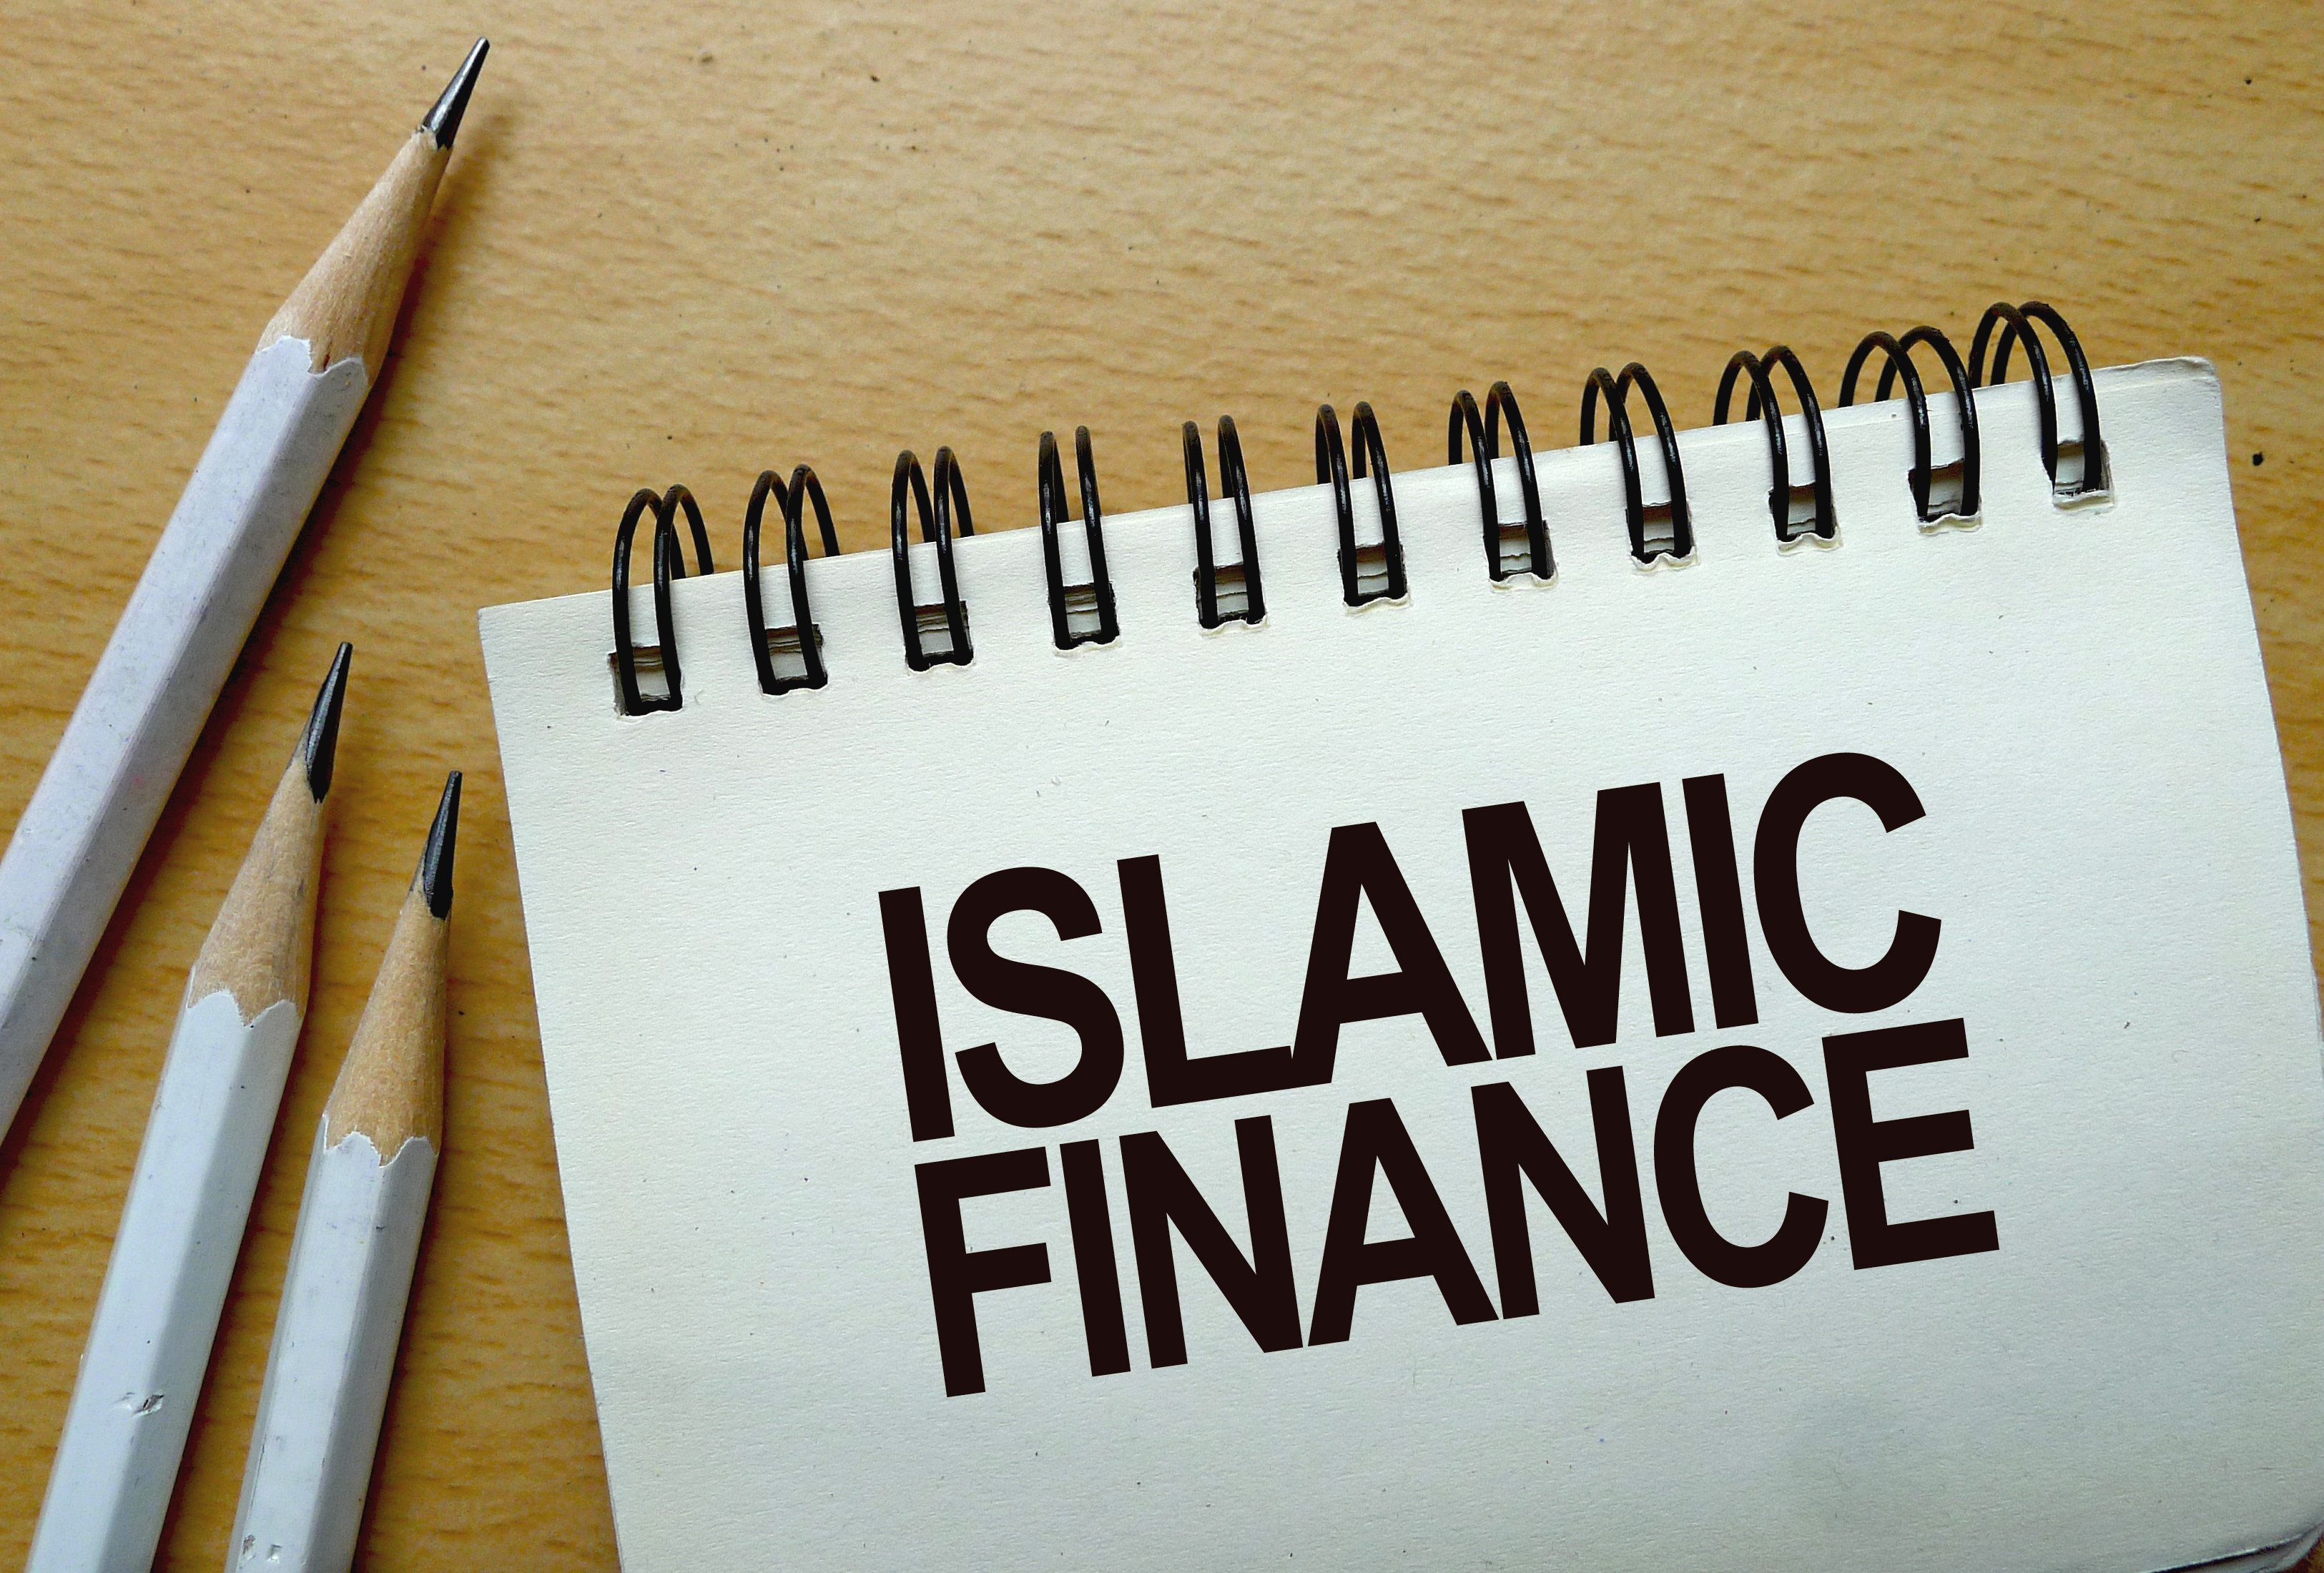 Islamic finance text written on a notebook with pencils. Photo: Shutterstock